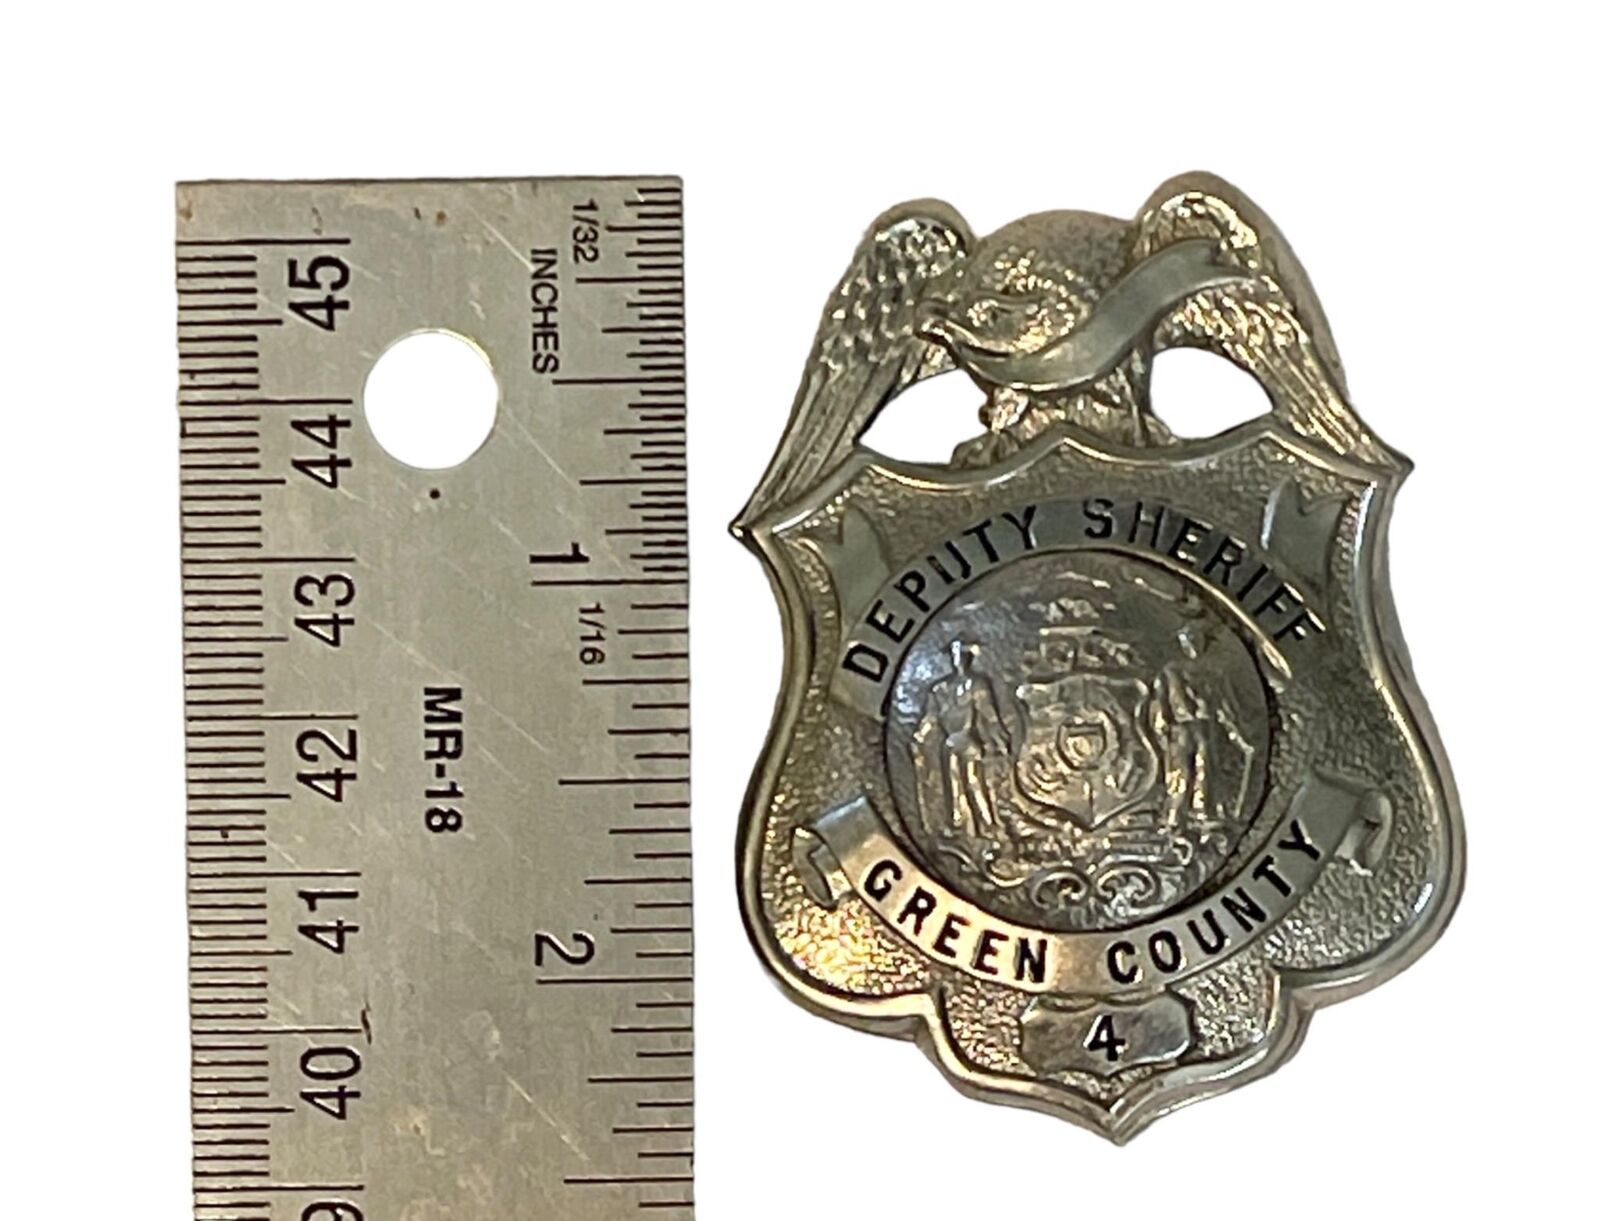 Vintage Obsolete Badge Deputy Sheriff Green County 4 Whitehead & Hoag